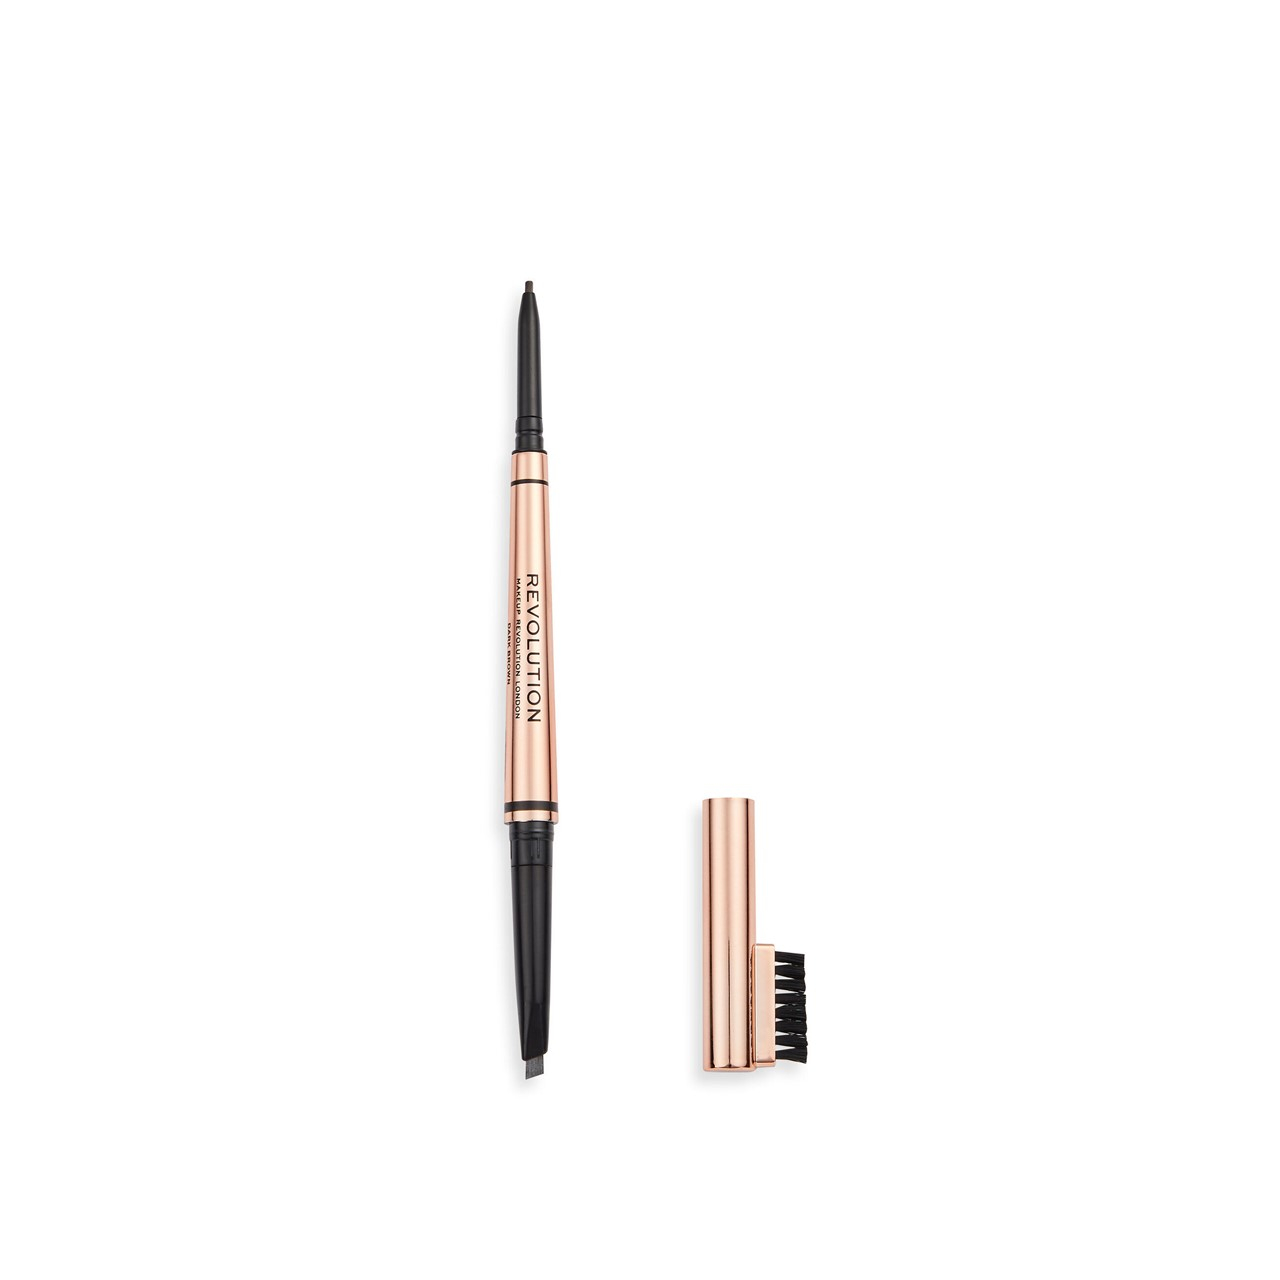 Makeup Revolution Balayage Duo Brow Pencil Dark Brown 0.38g